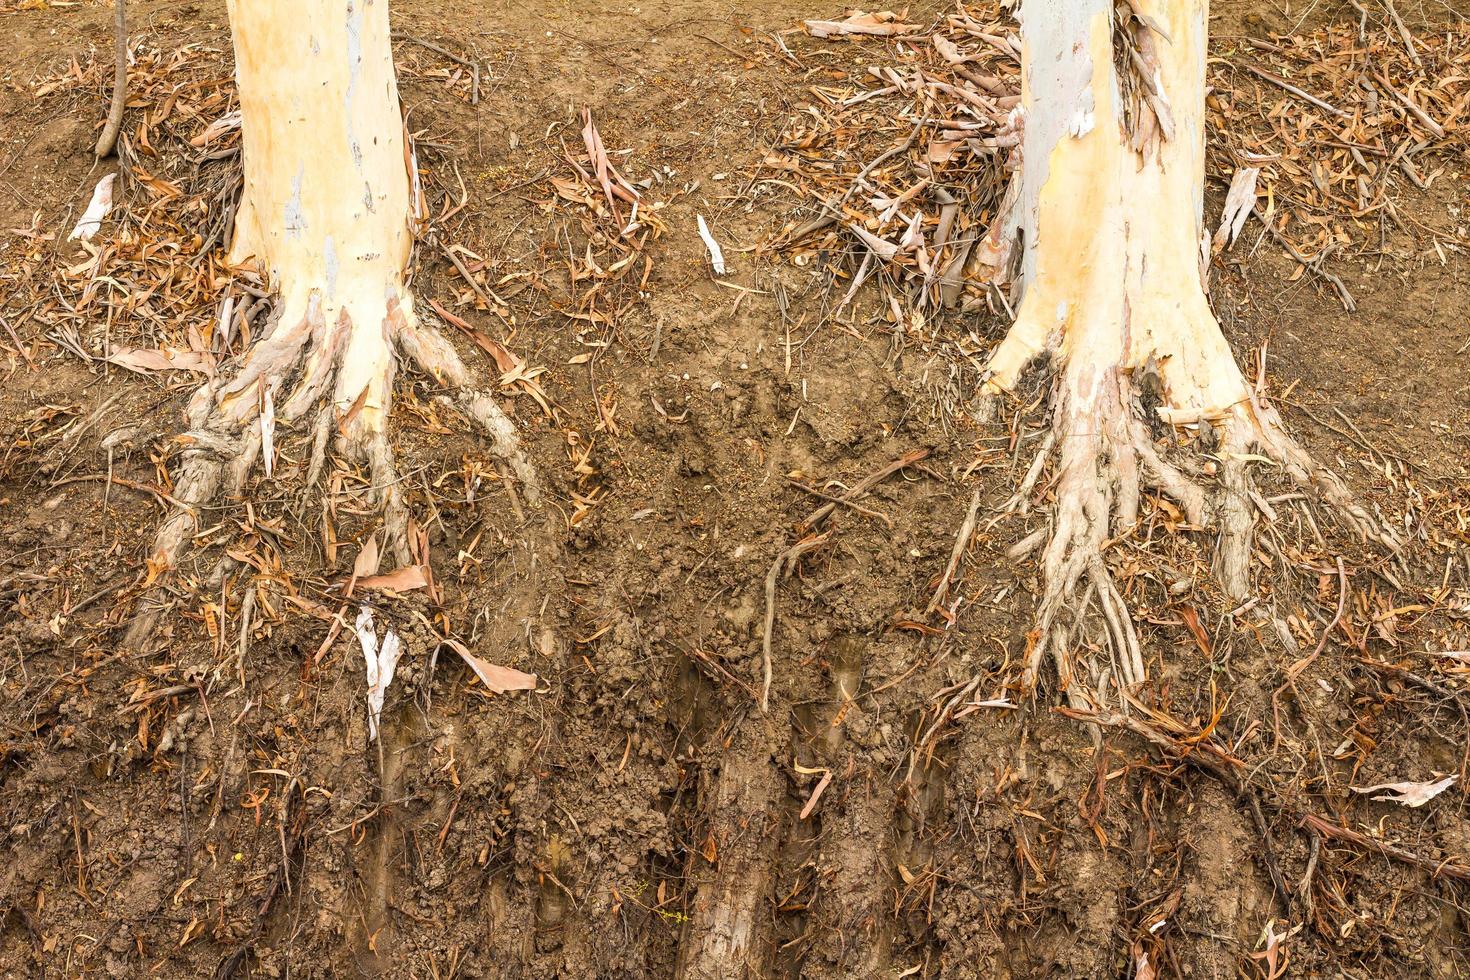 Dry eucalyptus tree roots. photo